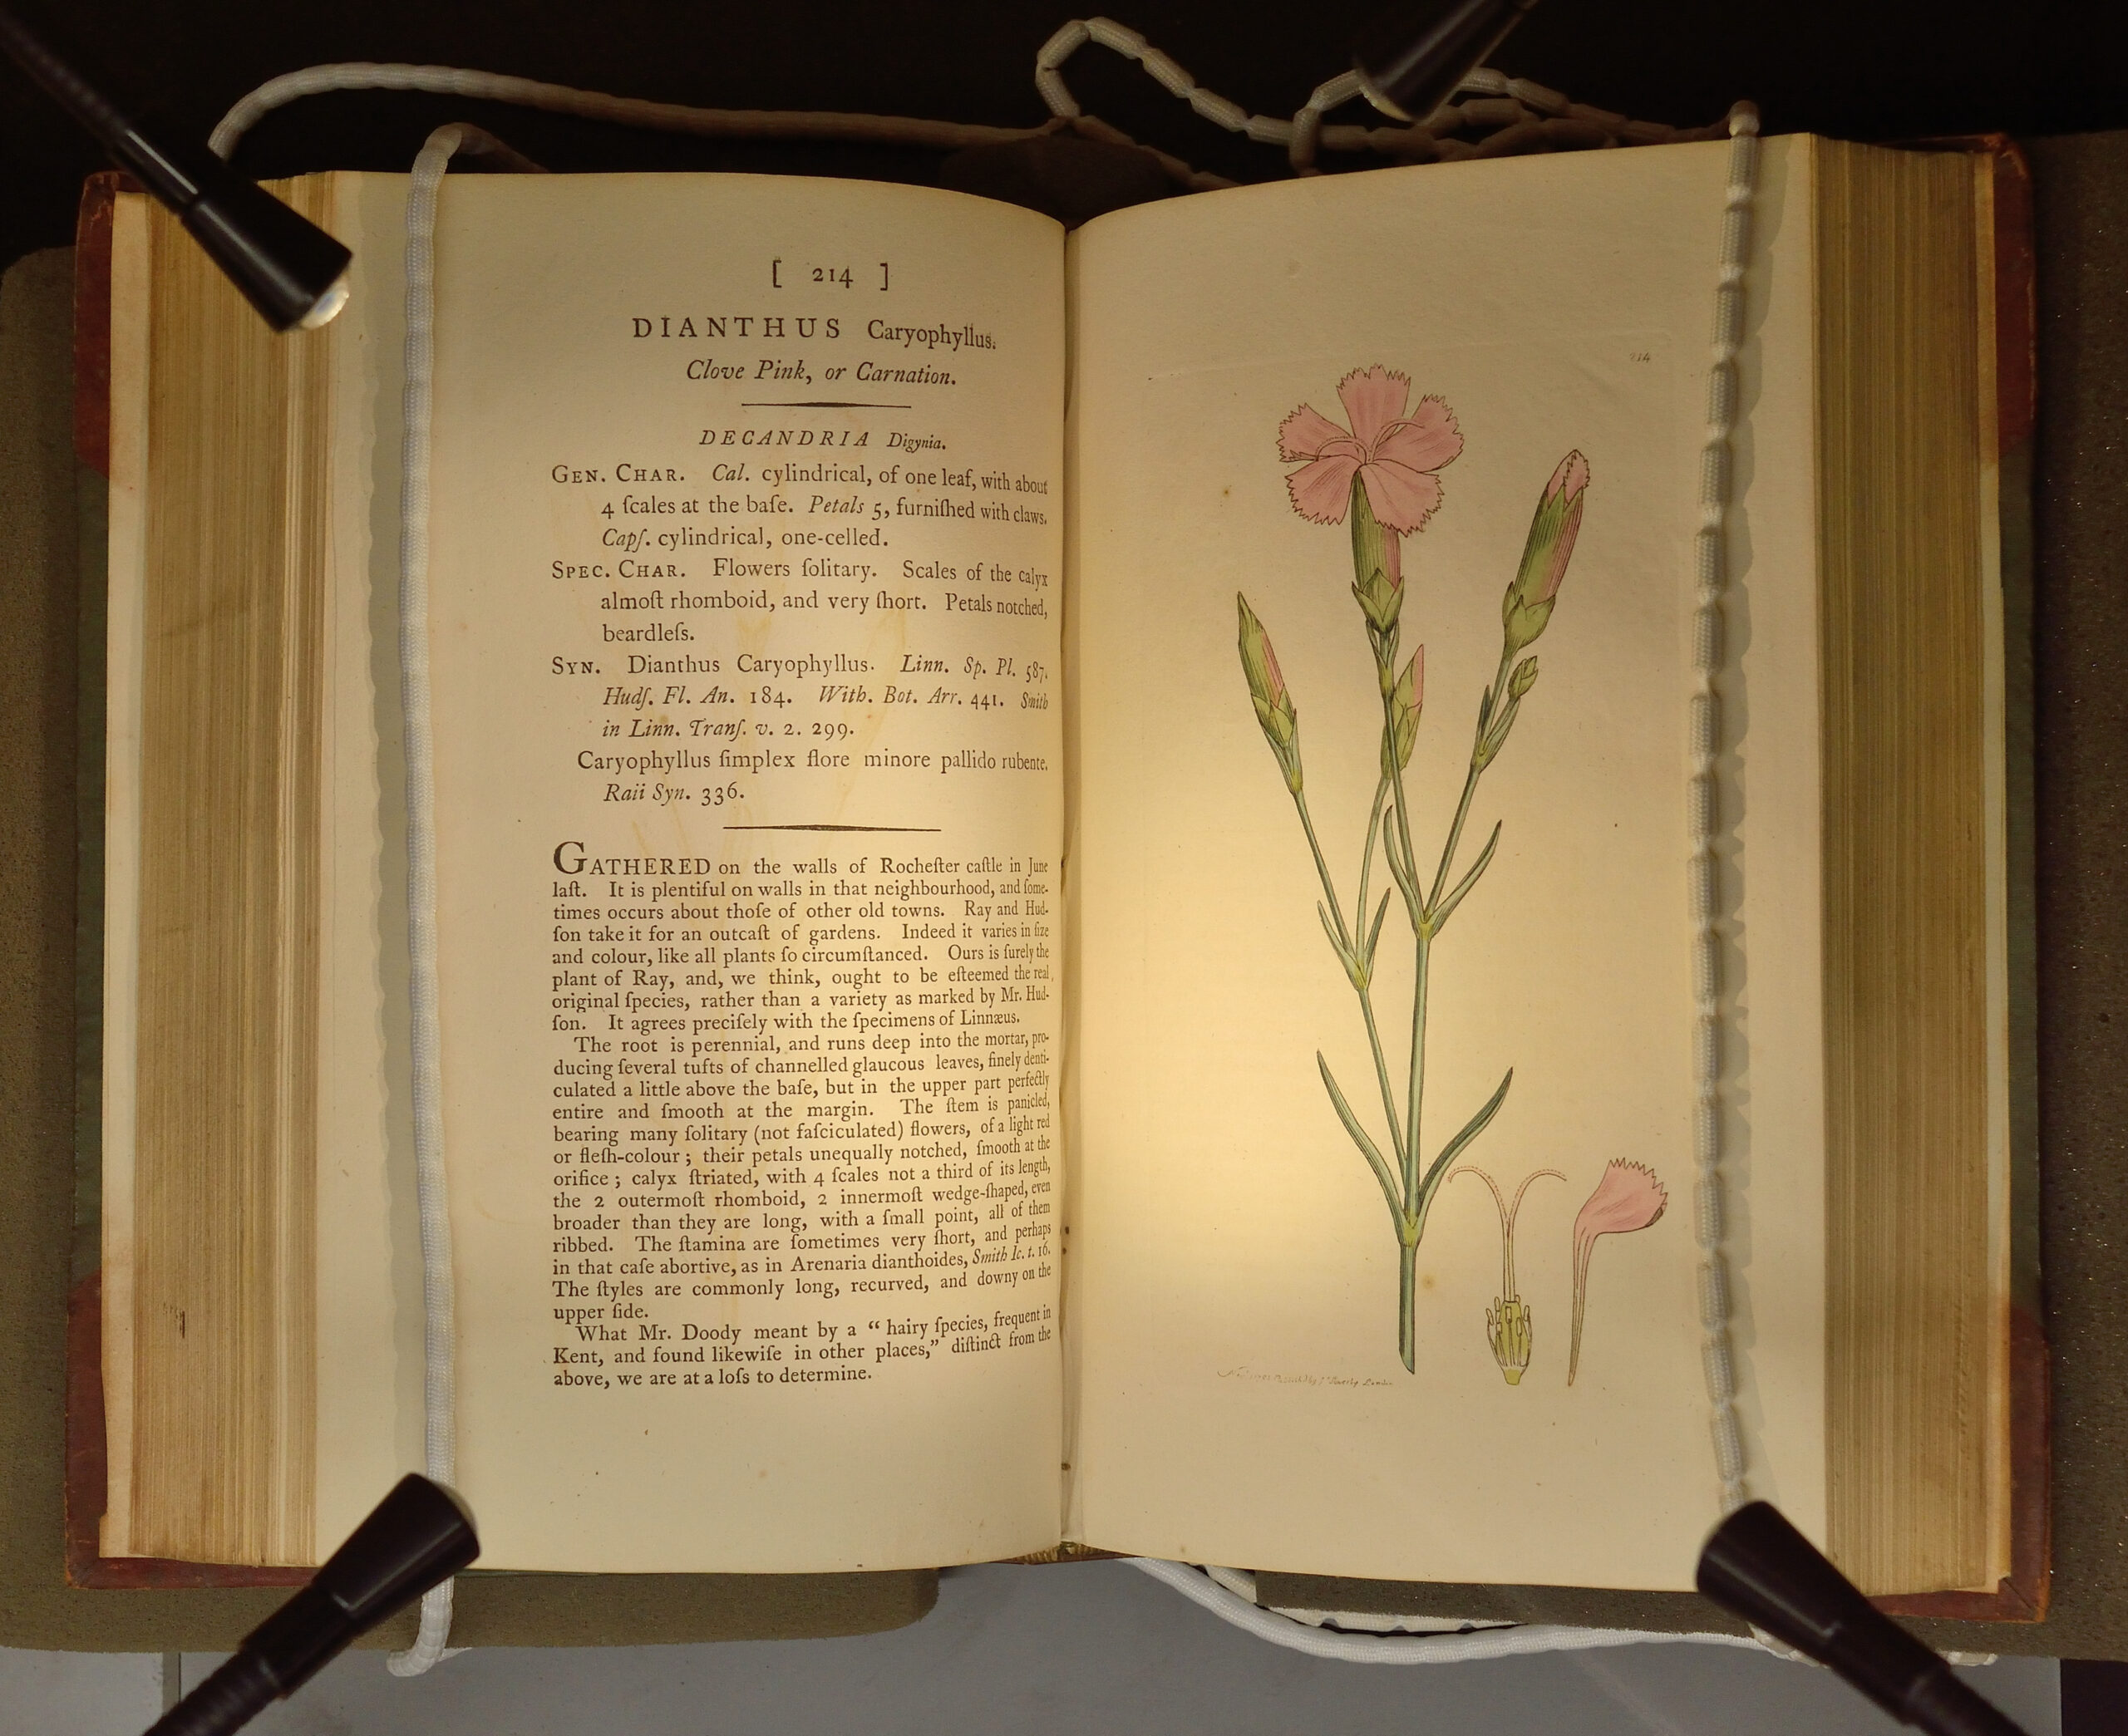 manuscript or botanical illustrations